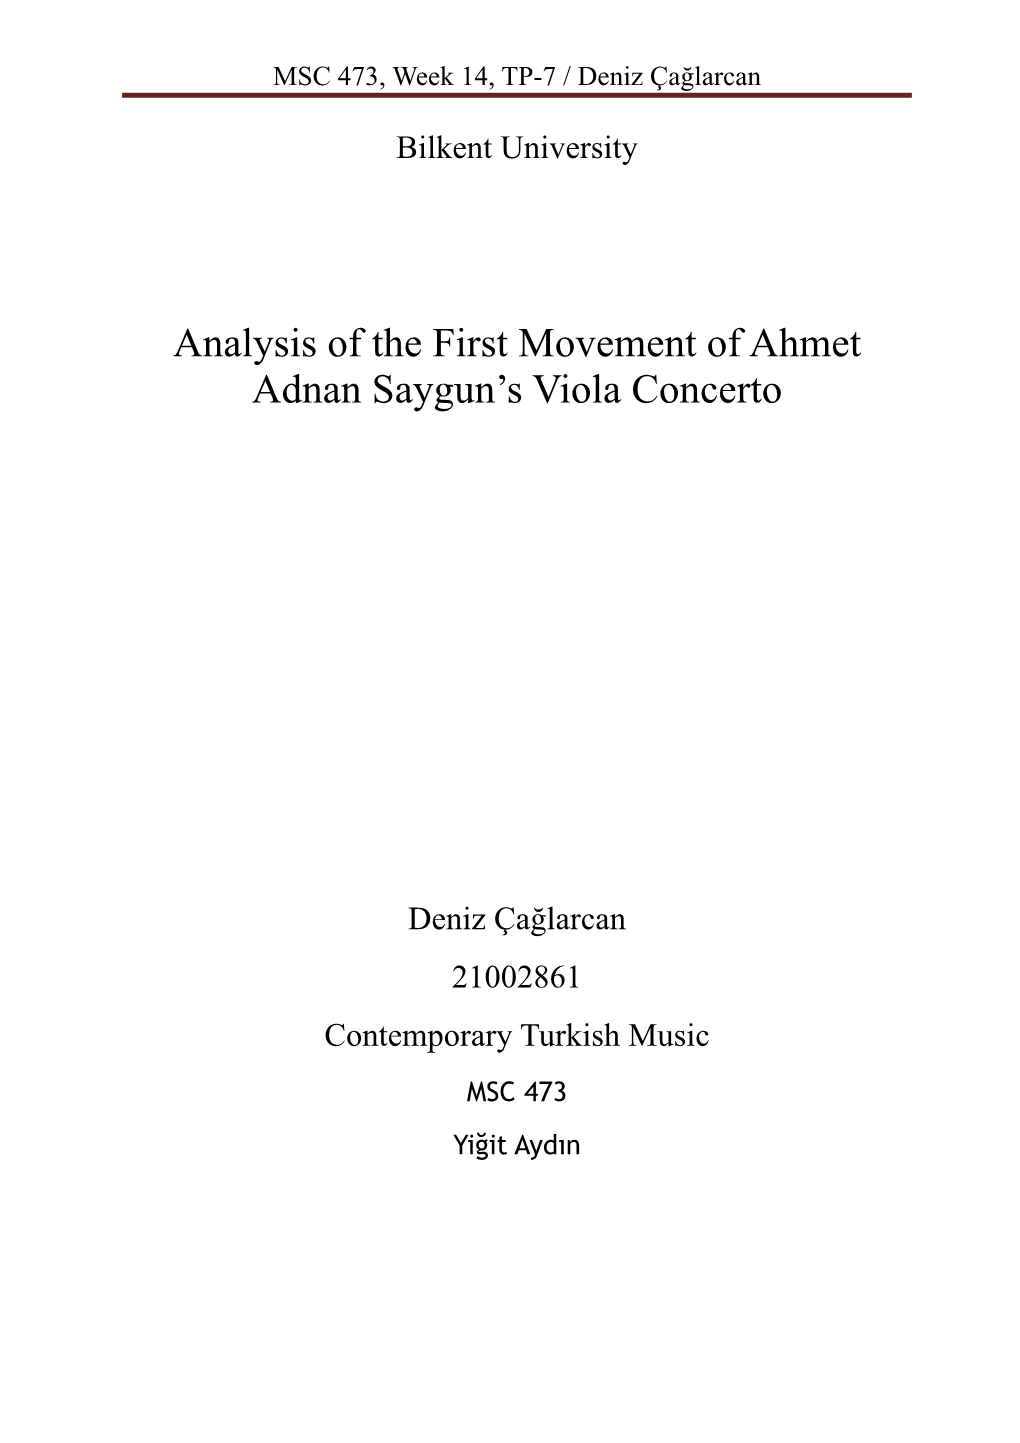 Analysis of the First Movement of Ahmet Adnan Saygun's Viola